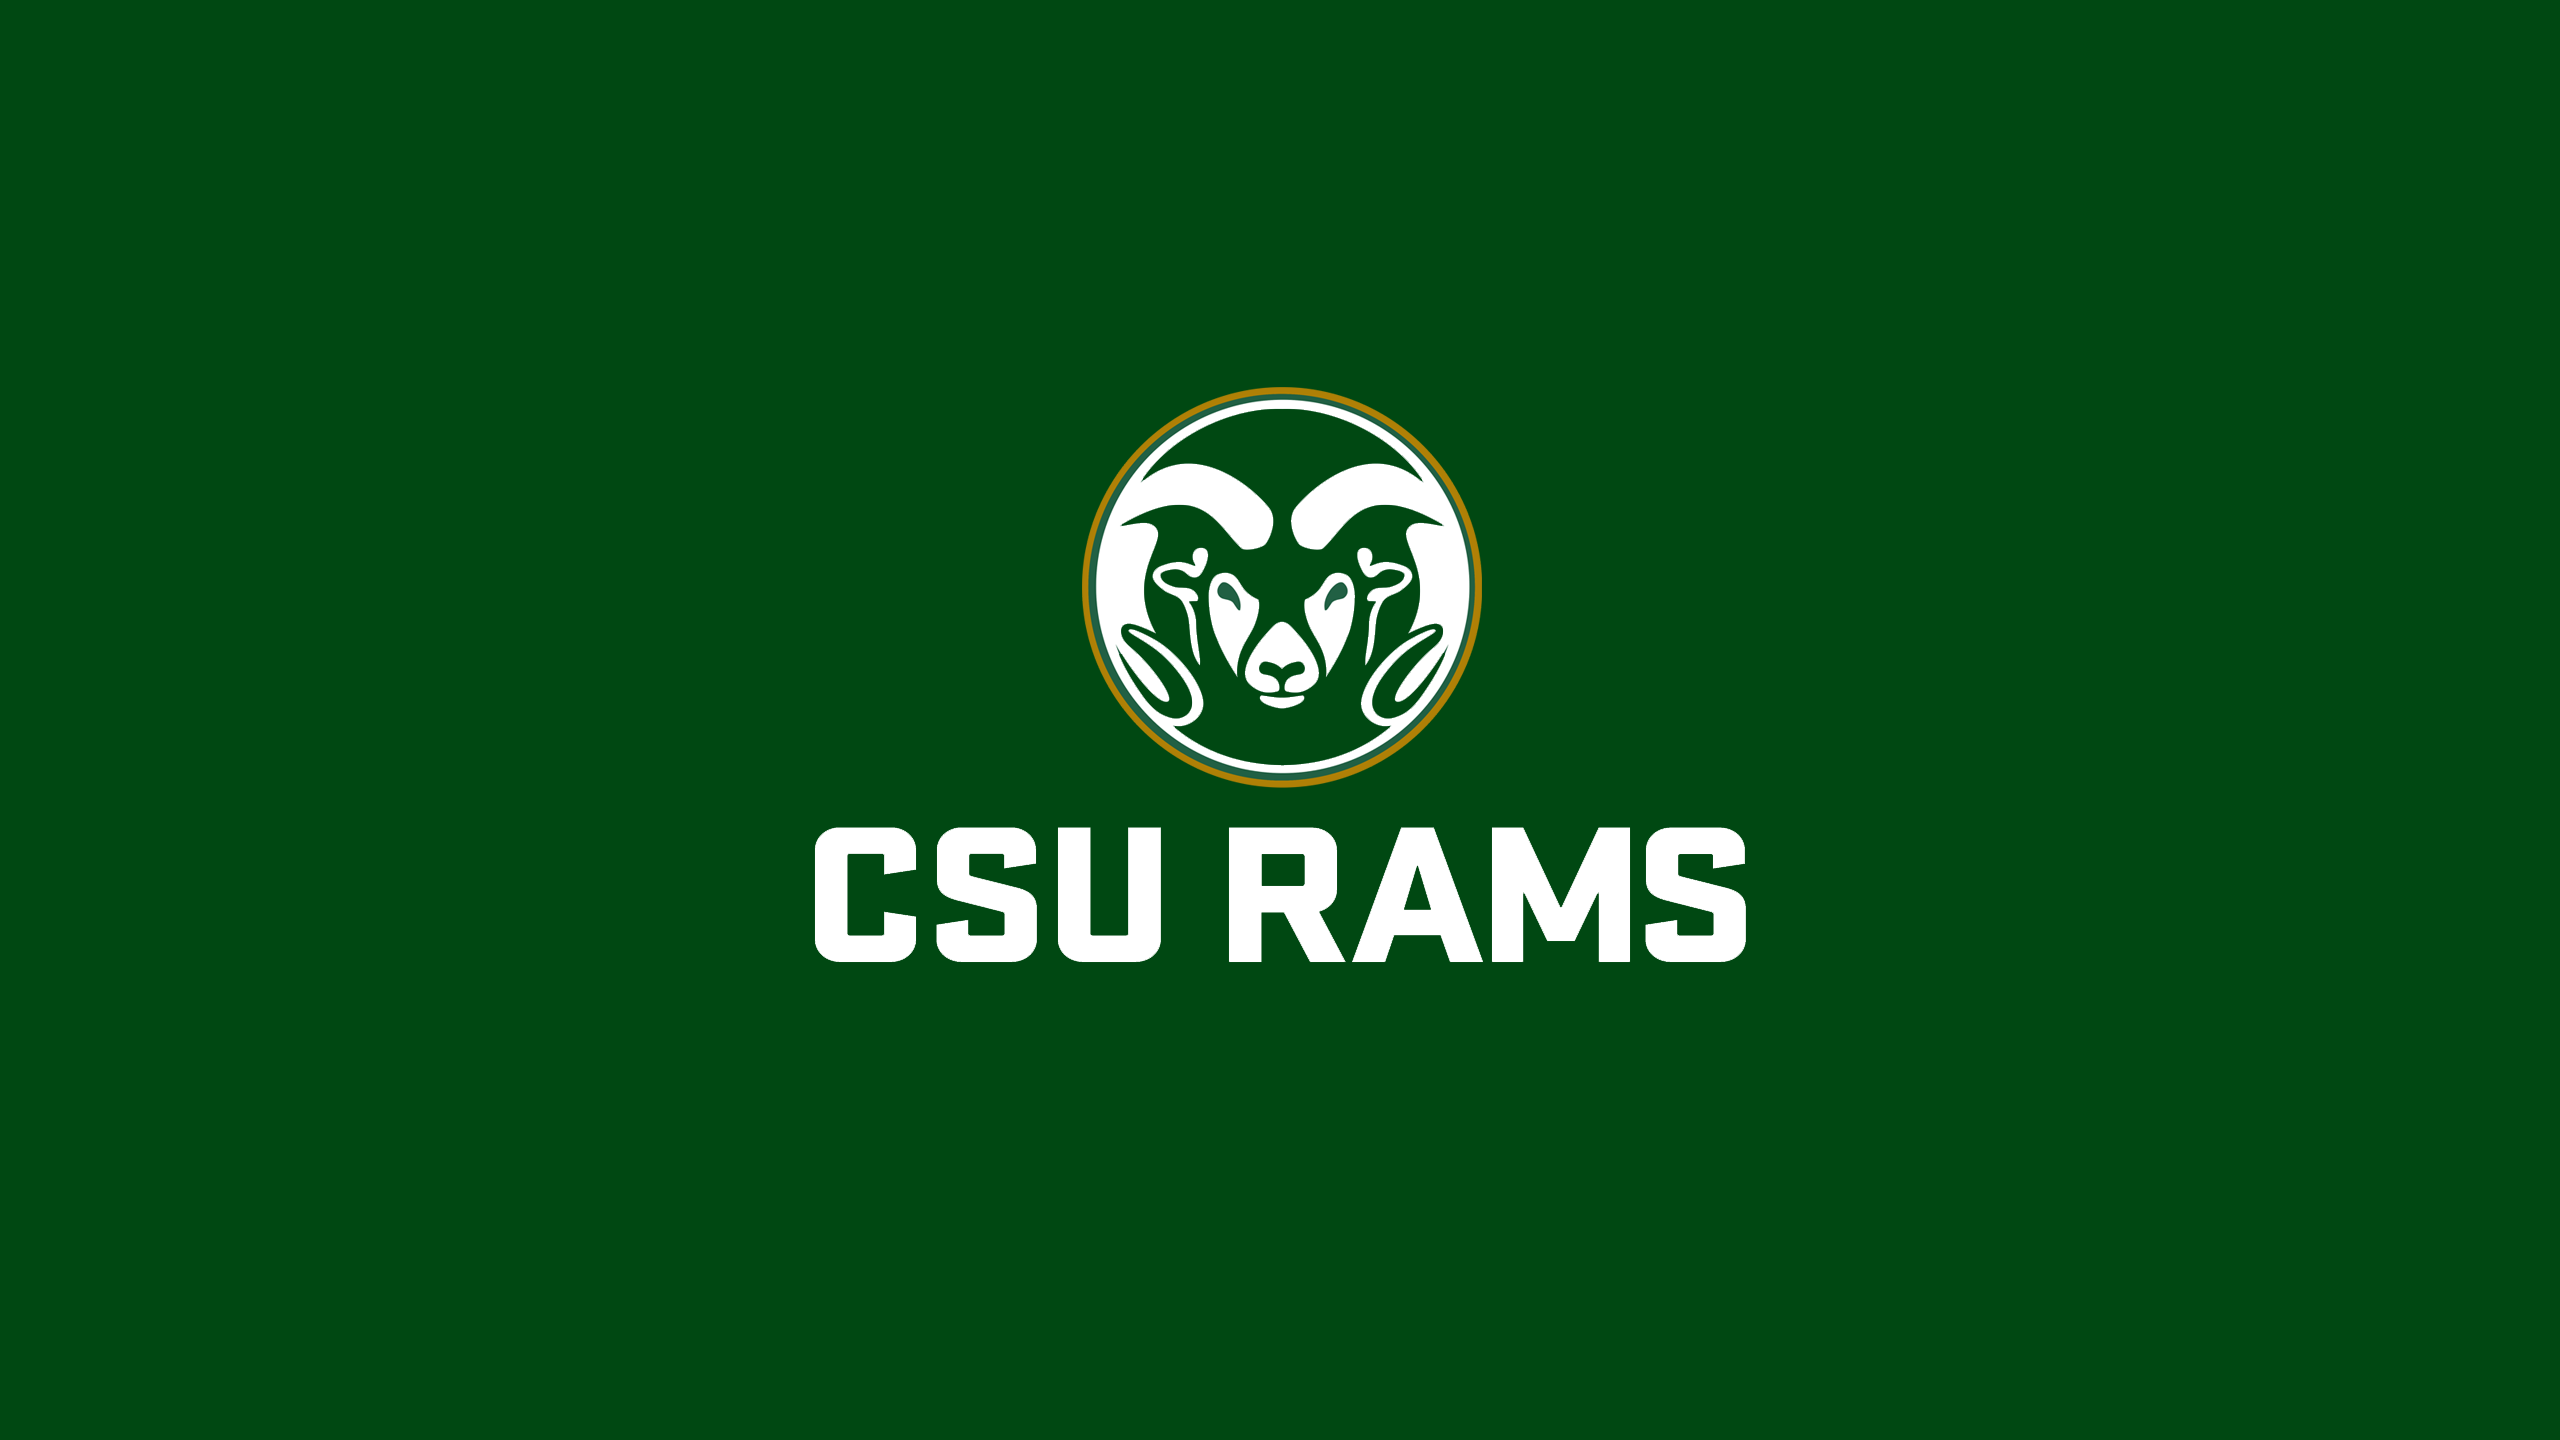 Colorado State Rams Basketball - NCAAB - Square Bettor